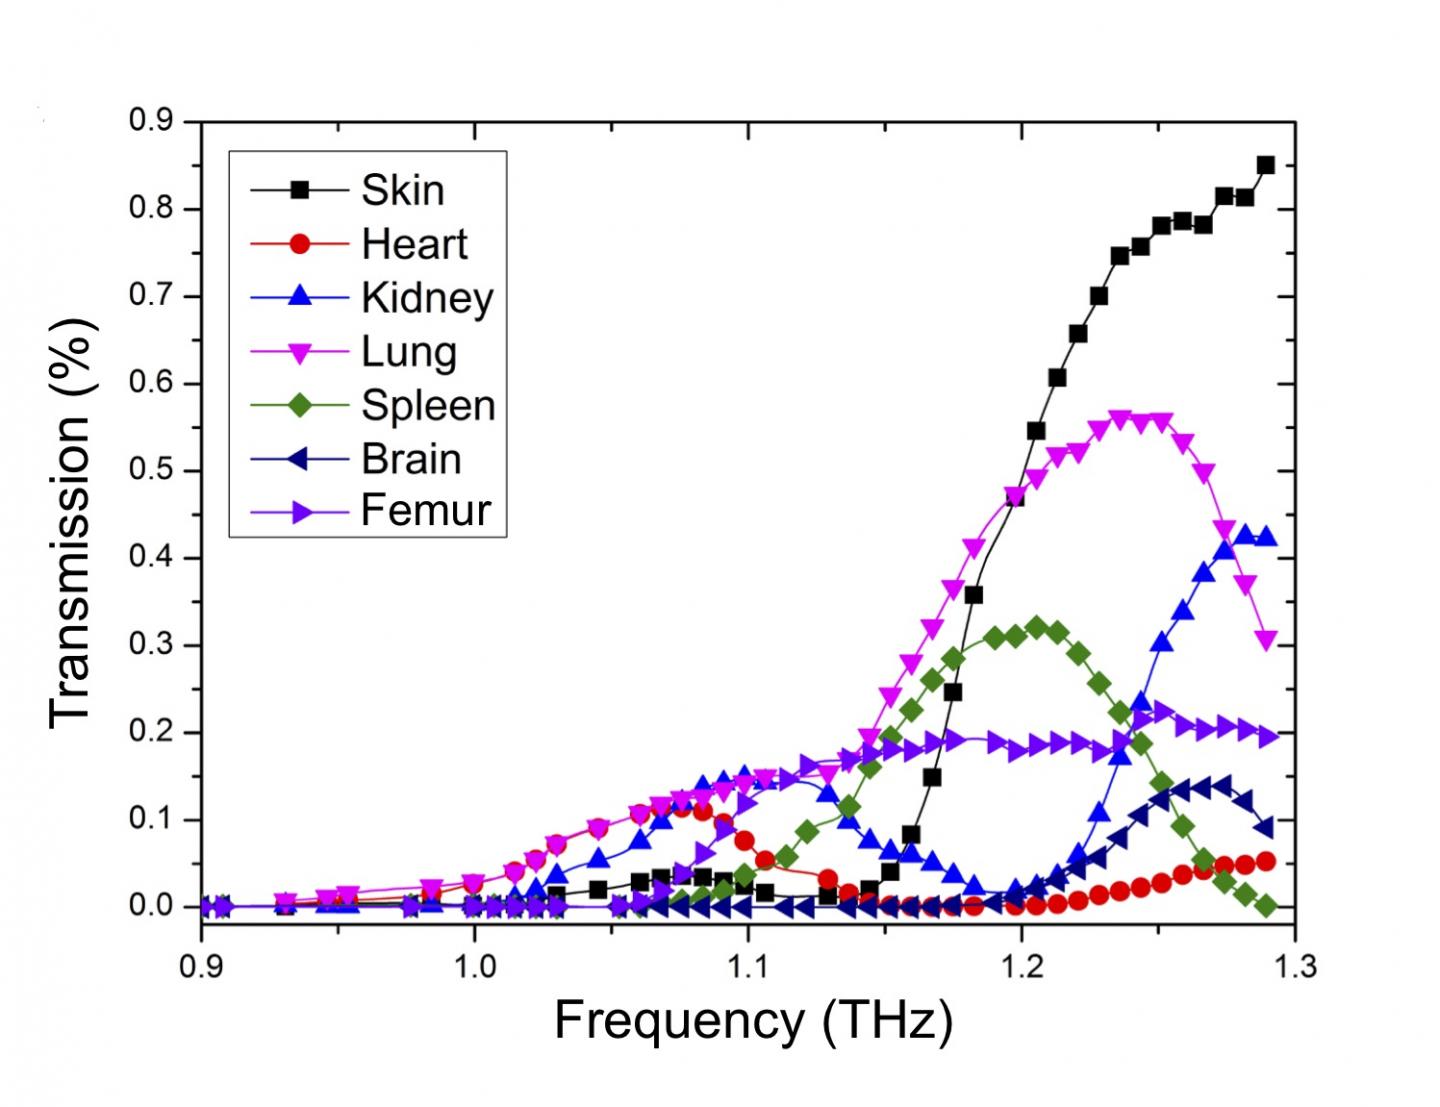 Figure 2: Terahertz Transmission Spectra of Bio-Samples Using the SBE